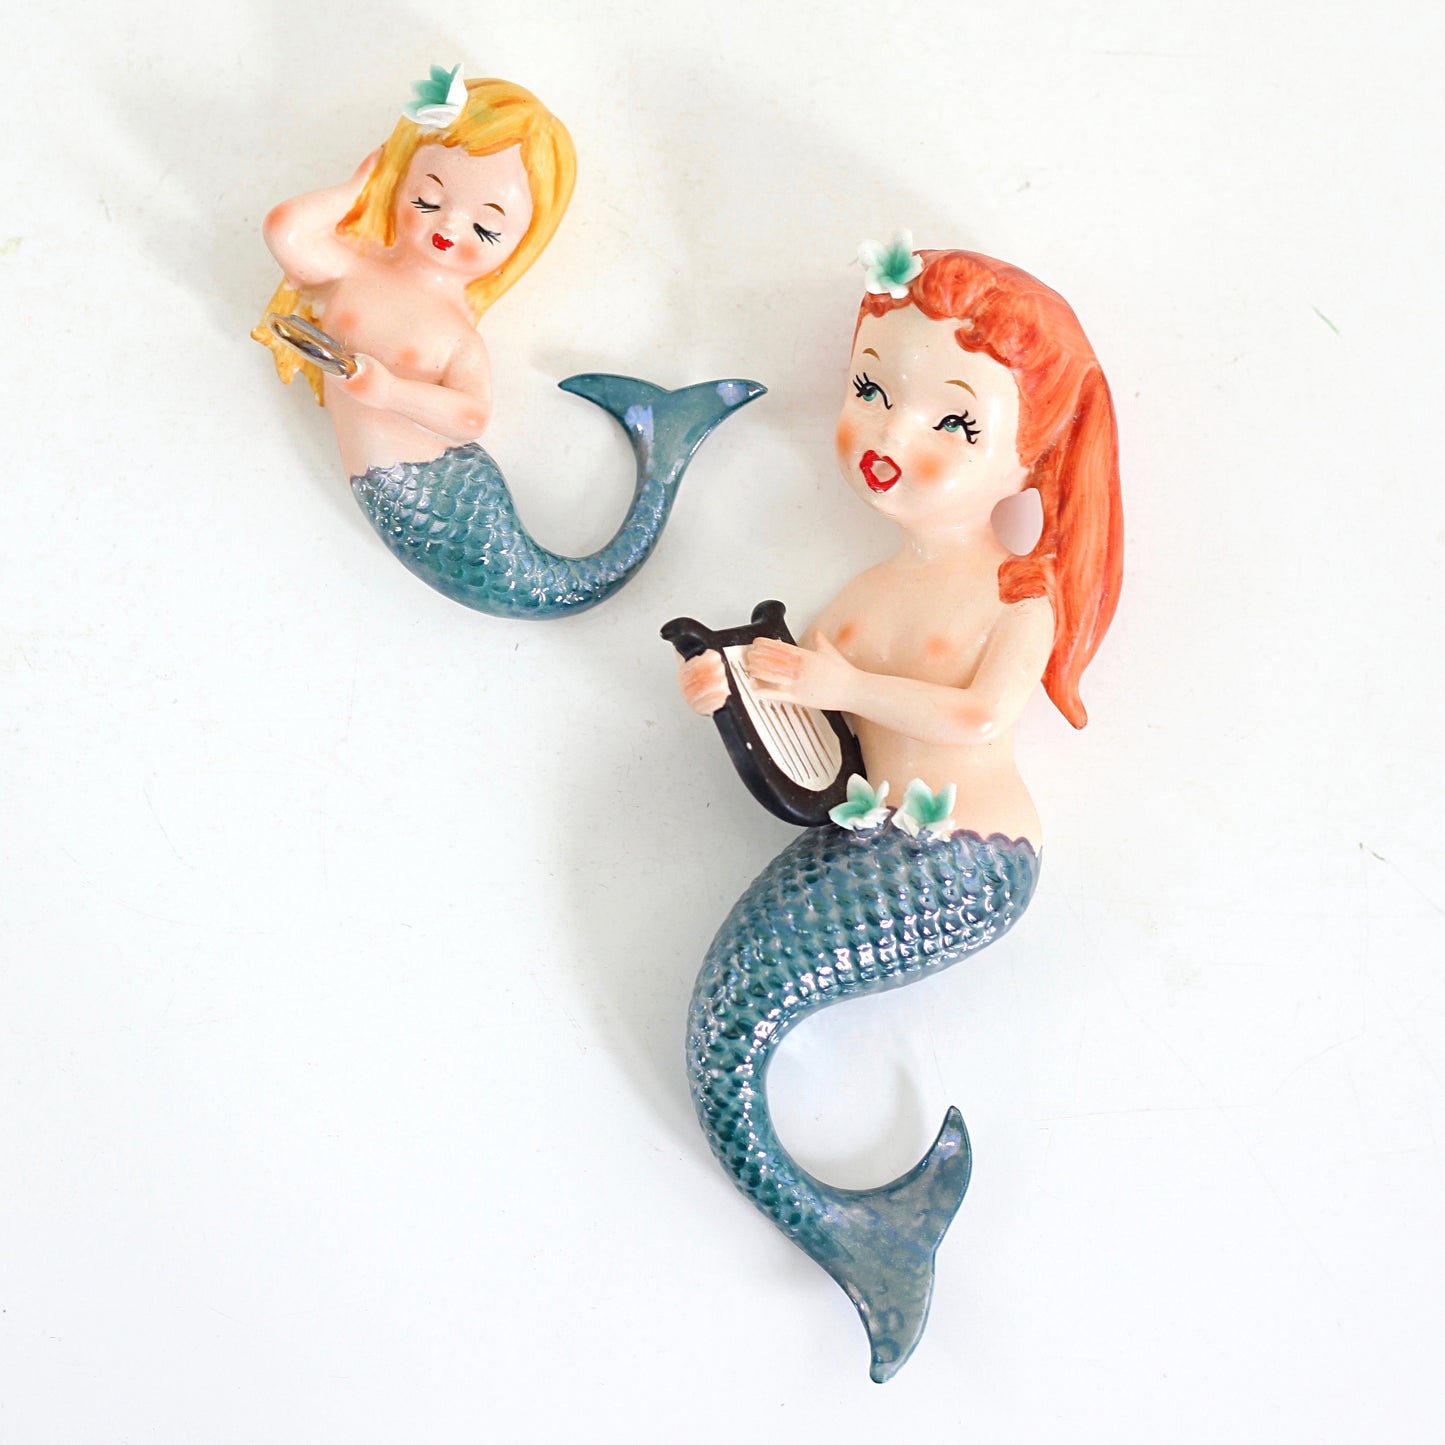 SOLD - Rare Vintage 1950s Lefton Wall Mermaids